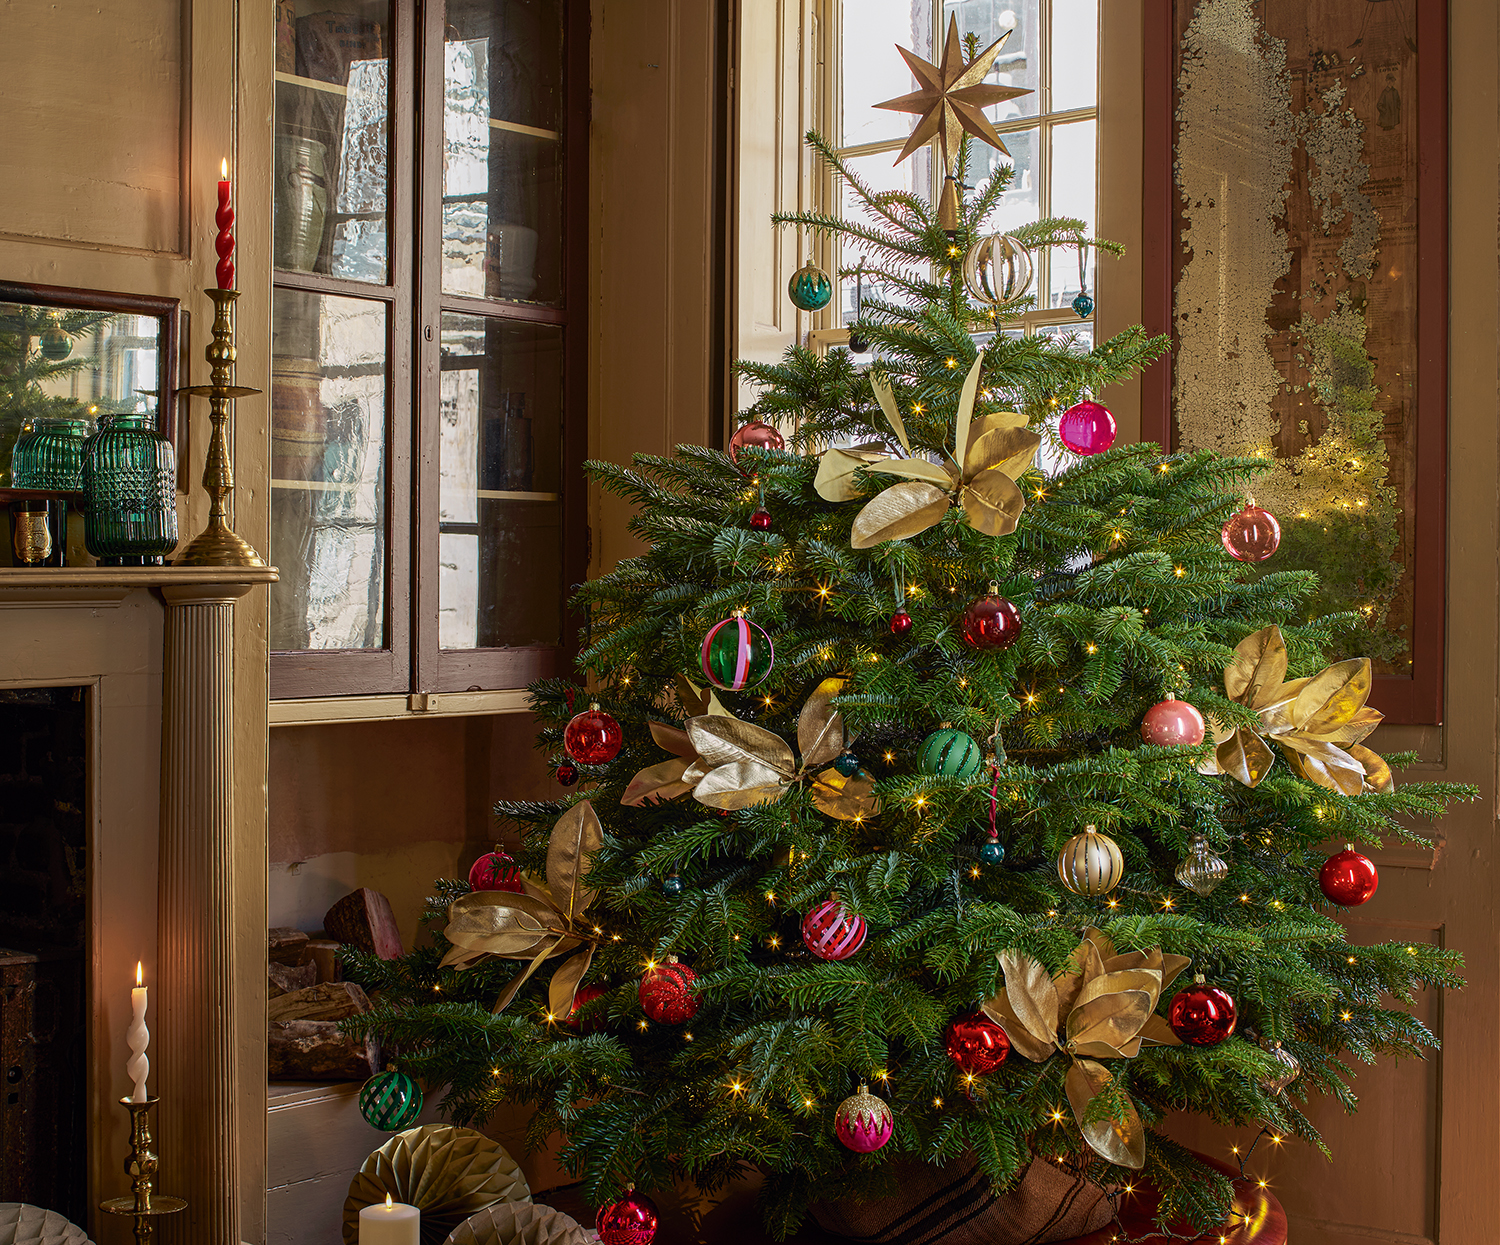 Mini Christmas tree, rainbow tree decorations, holiday table - Inspire  Uplift